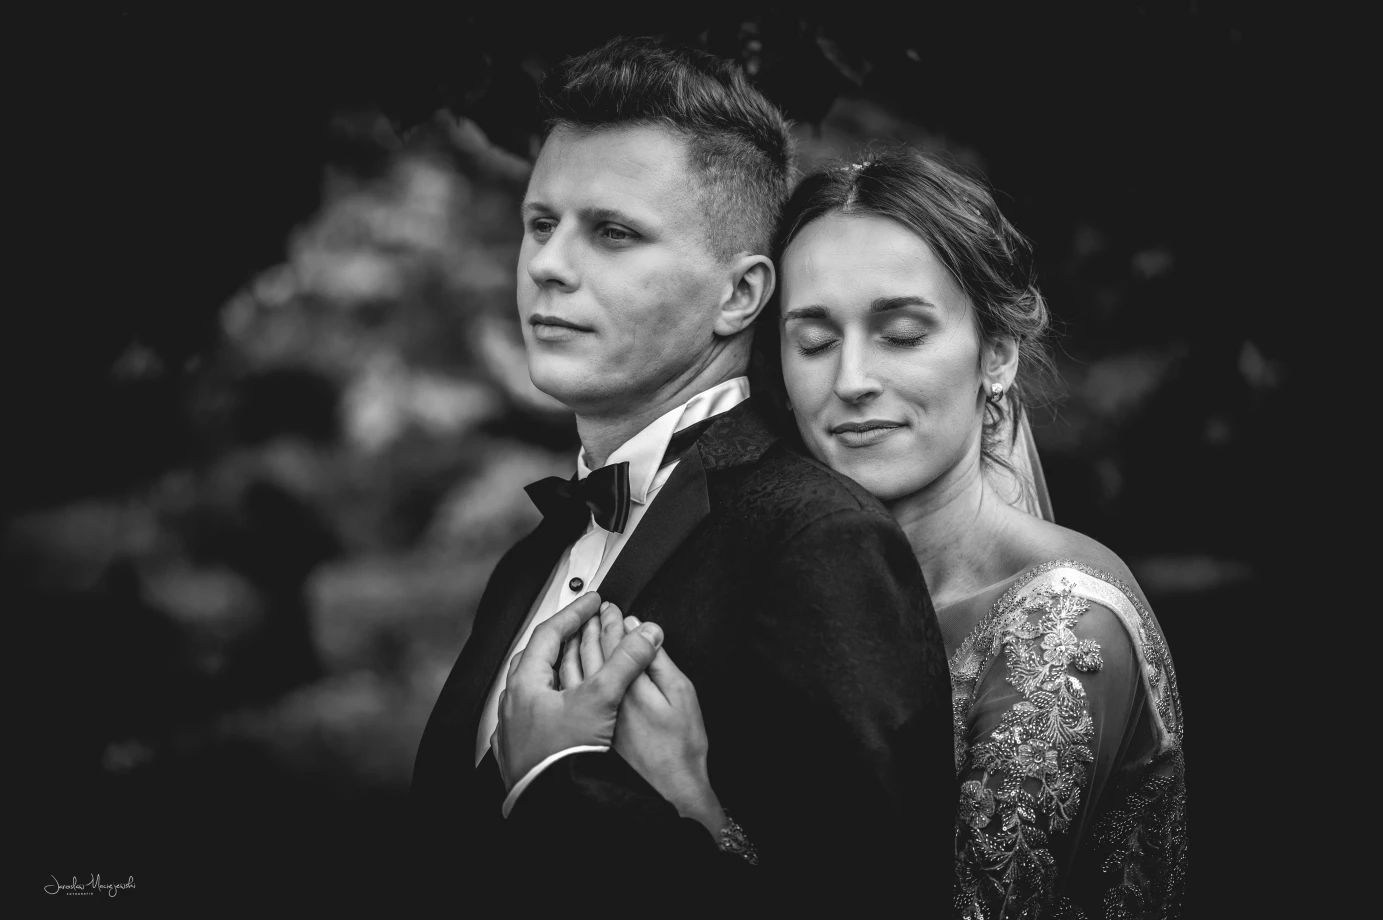 fotograf lodz jaroslaw-maciejewski-fotografia portfolio zdjecia slubne inspiracje wesele plener slubny sesja slubna